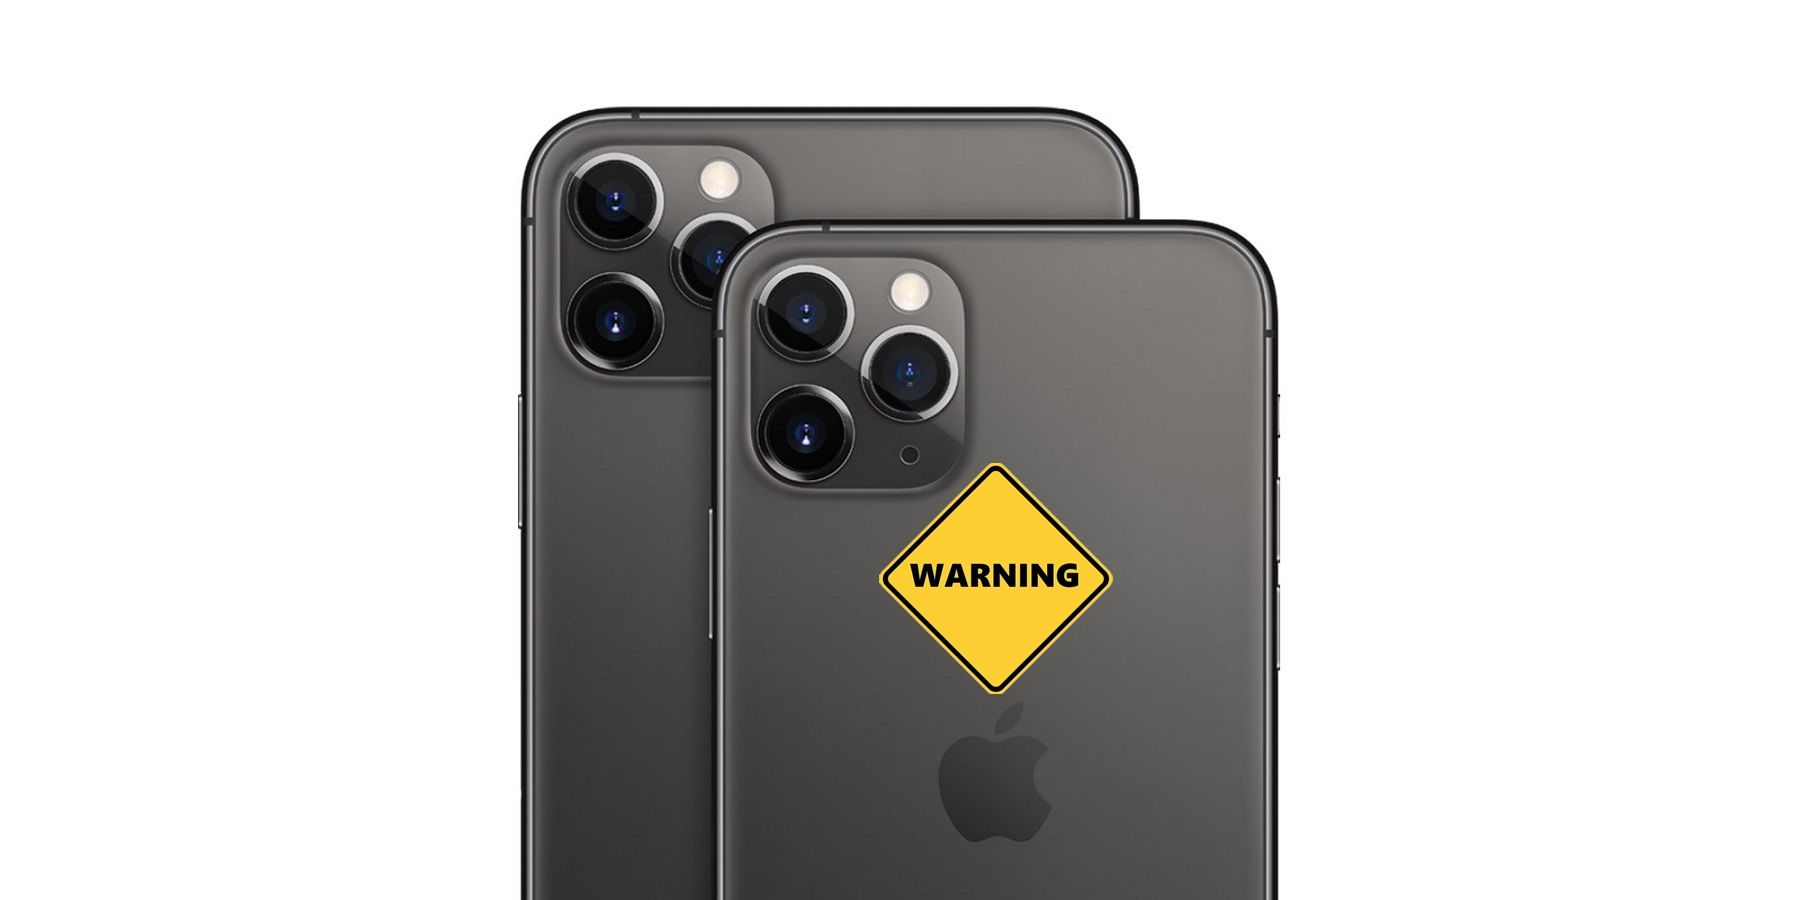 Traveller  iPhone 12 Pro Max hanging case black/burgundy/el dorado - CH  Carolina Herrera United States